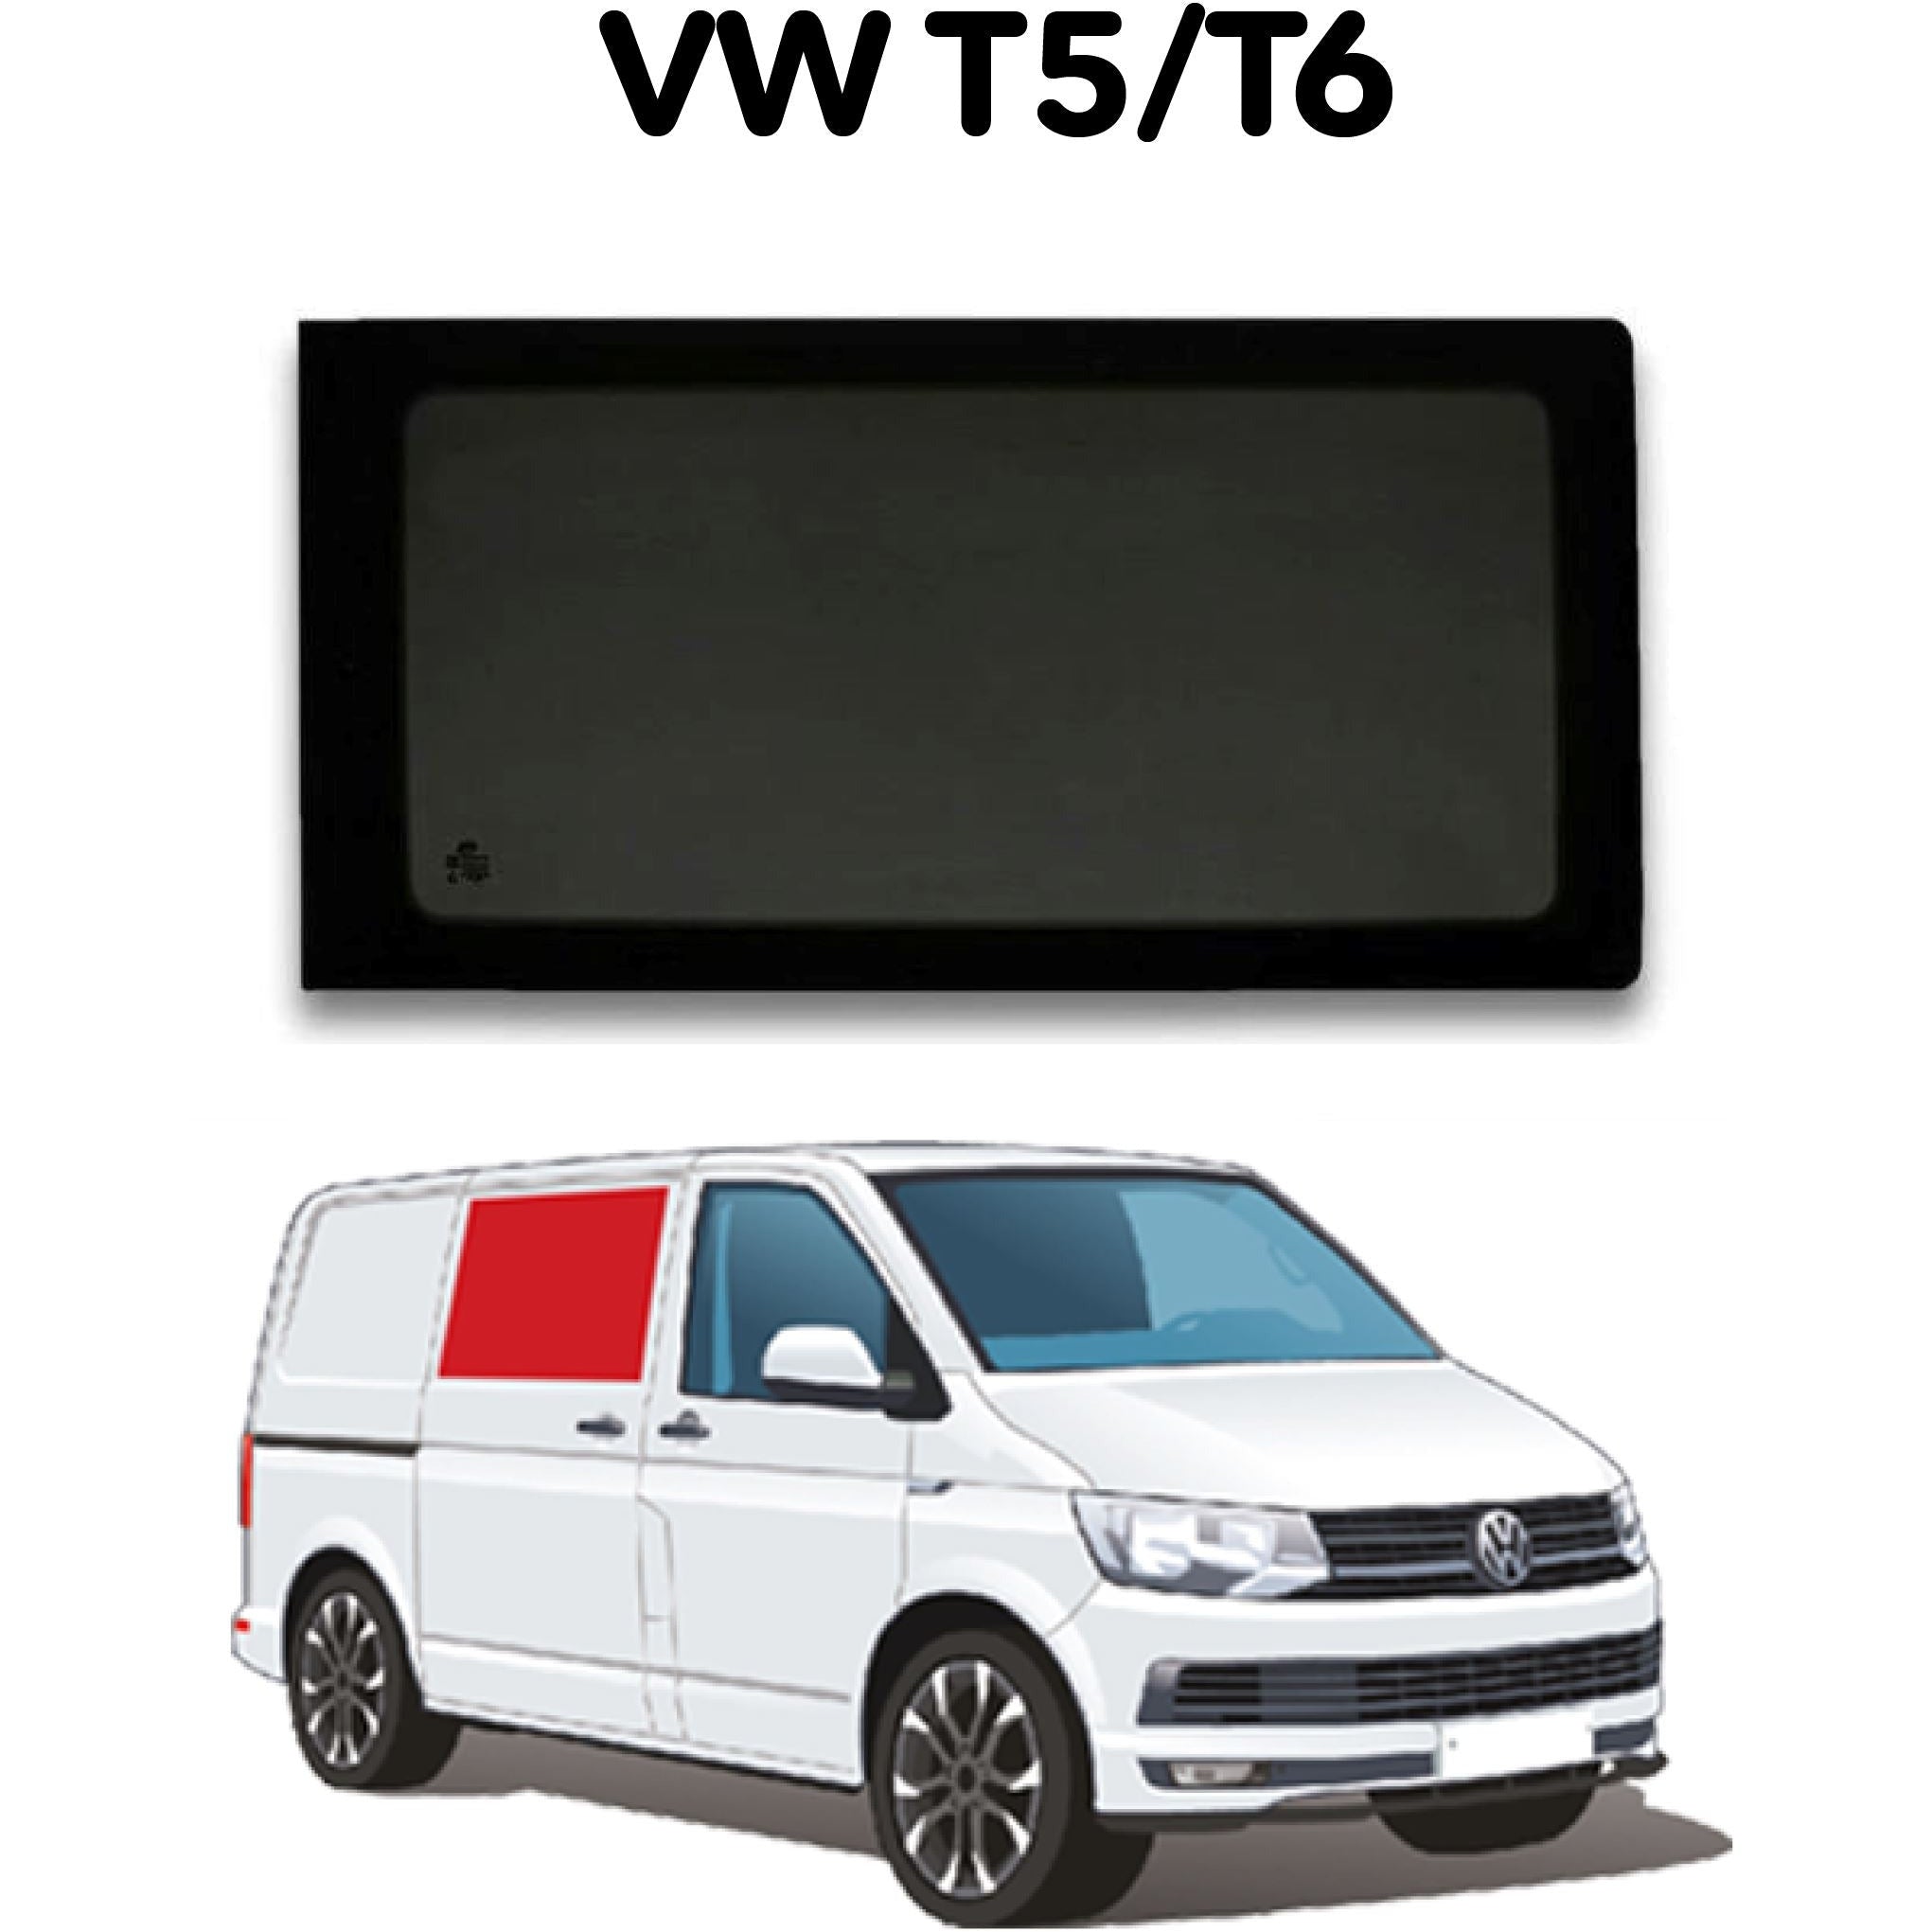 Right Fixed Window VW T5 / T6 - Sliding Door Camper Glass by Kiravans 